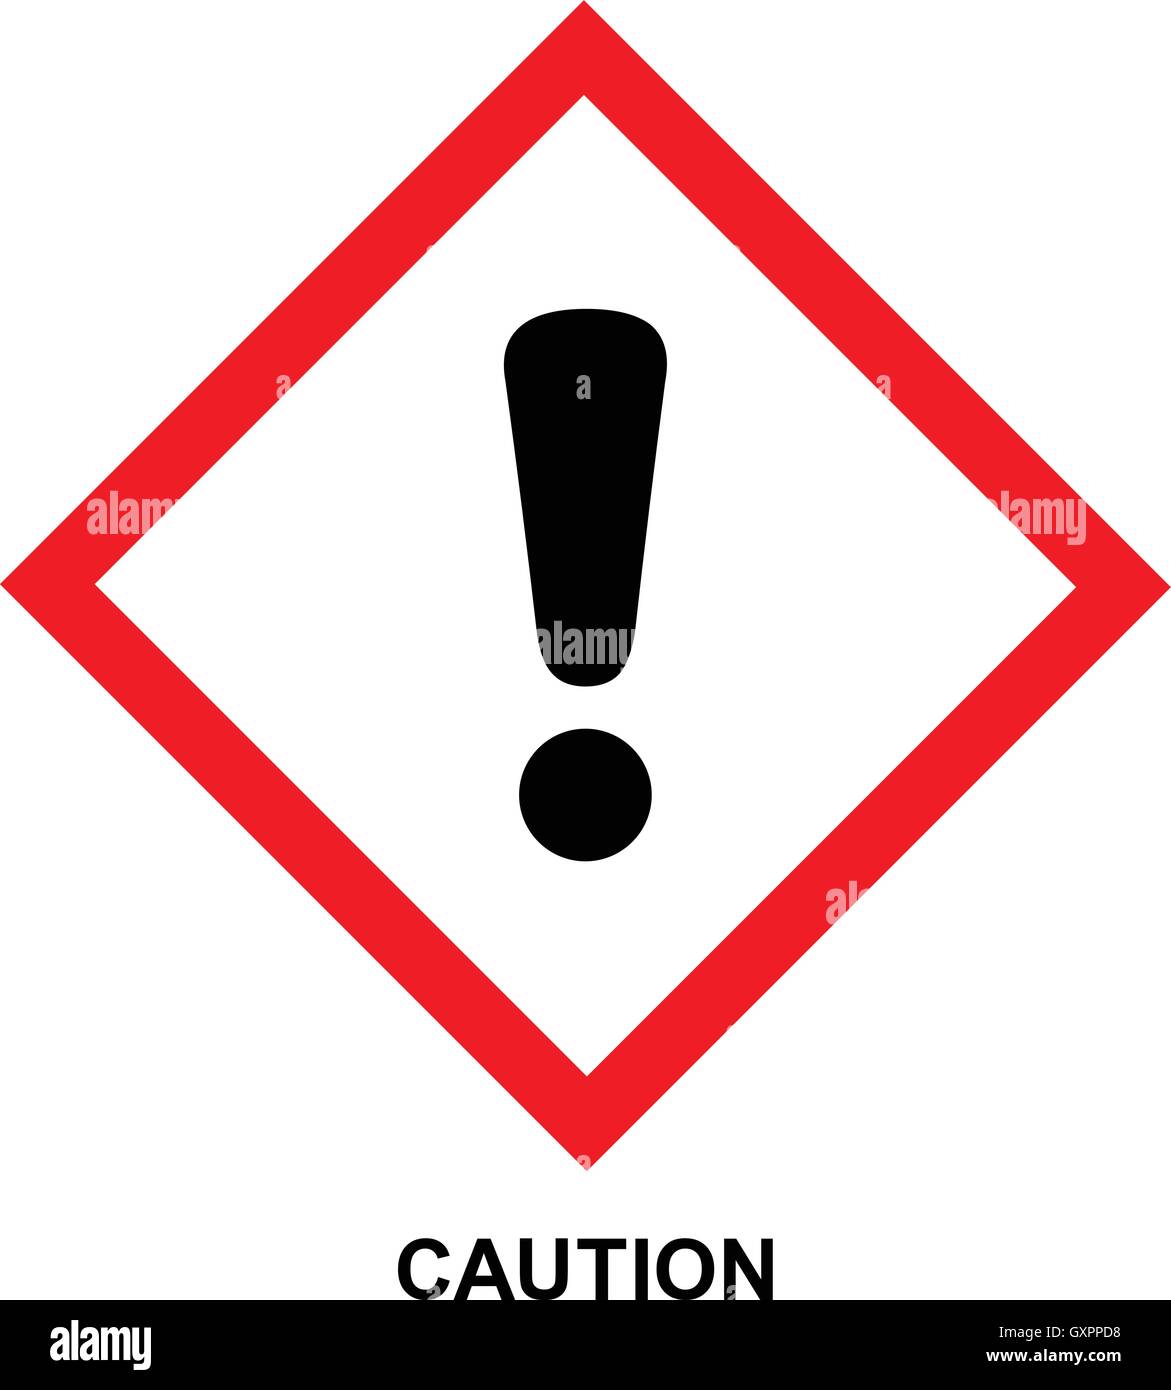 GHS hazard pictogram - CAUTION, health hazard warning sign, isolated vector illustration. Stock Vector